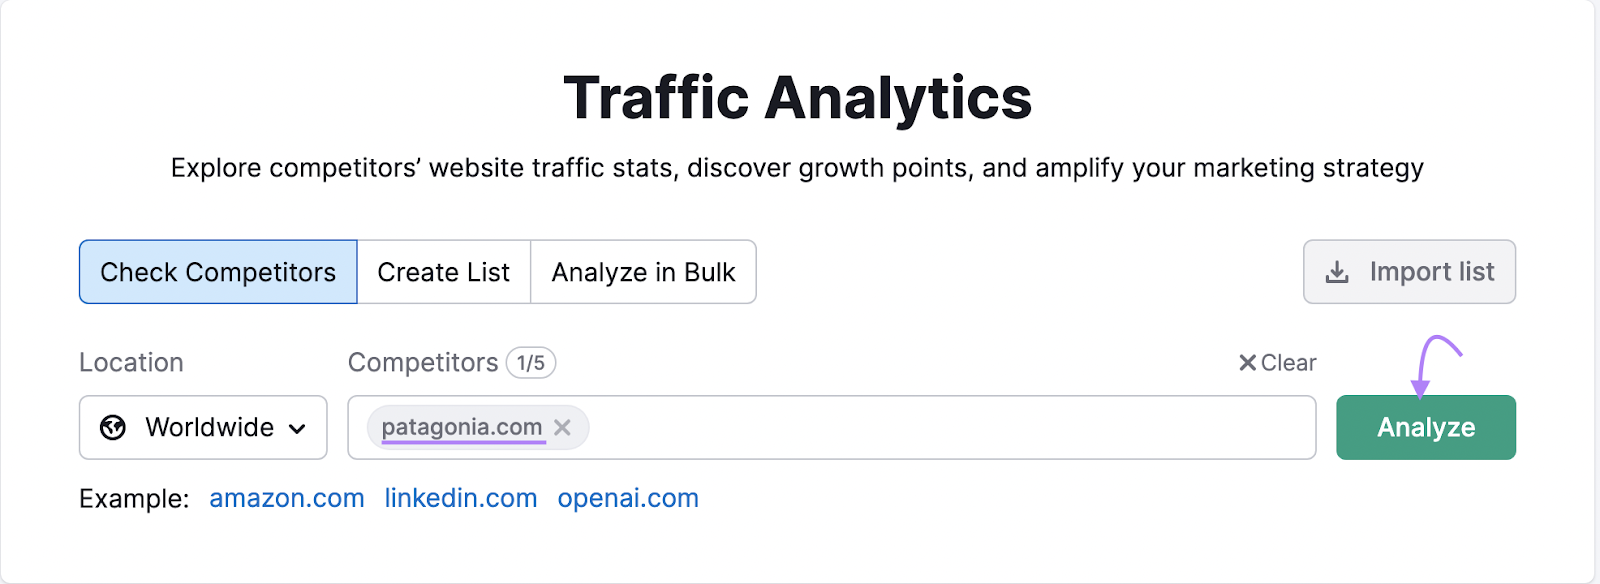 Traffic Analytics tool